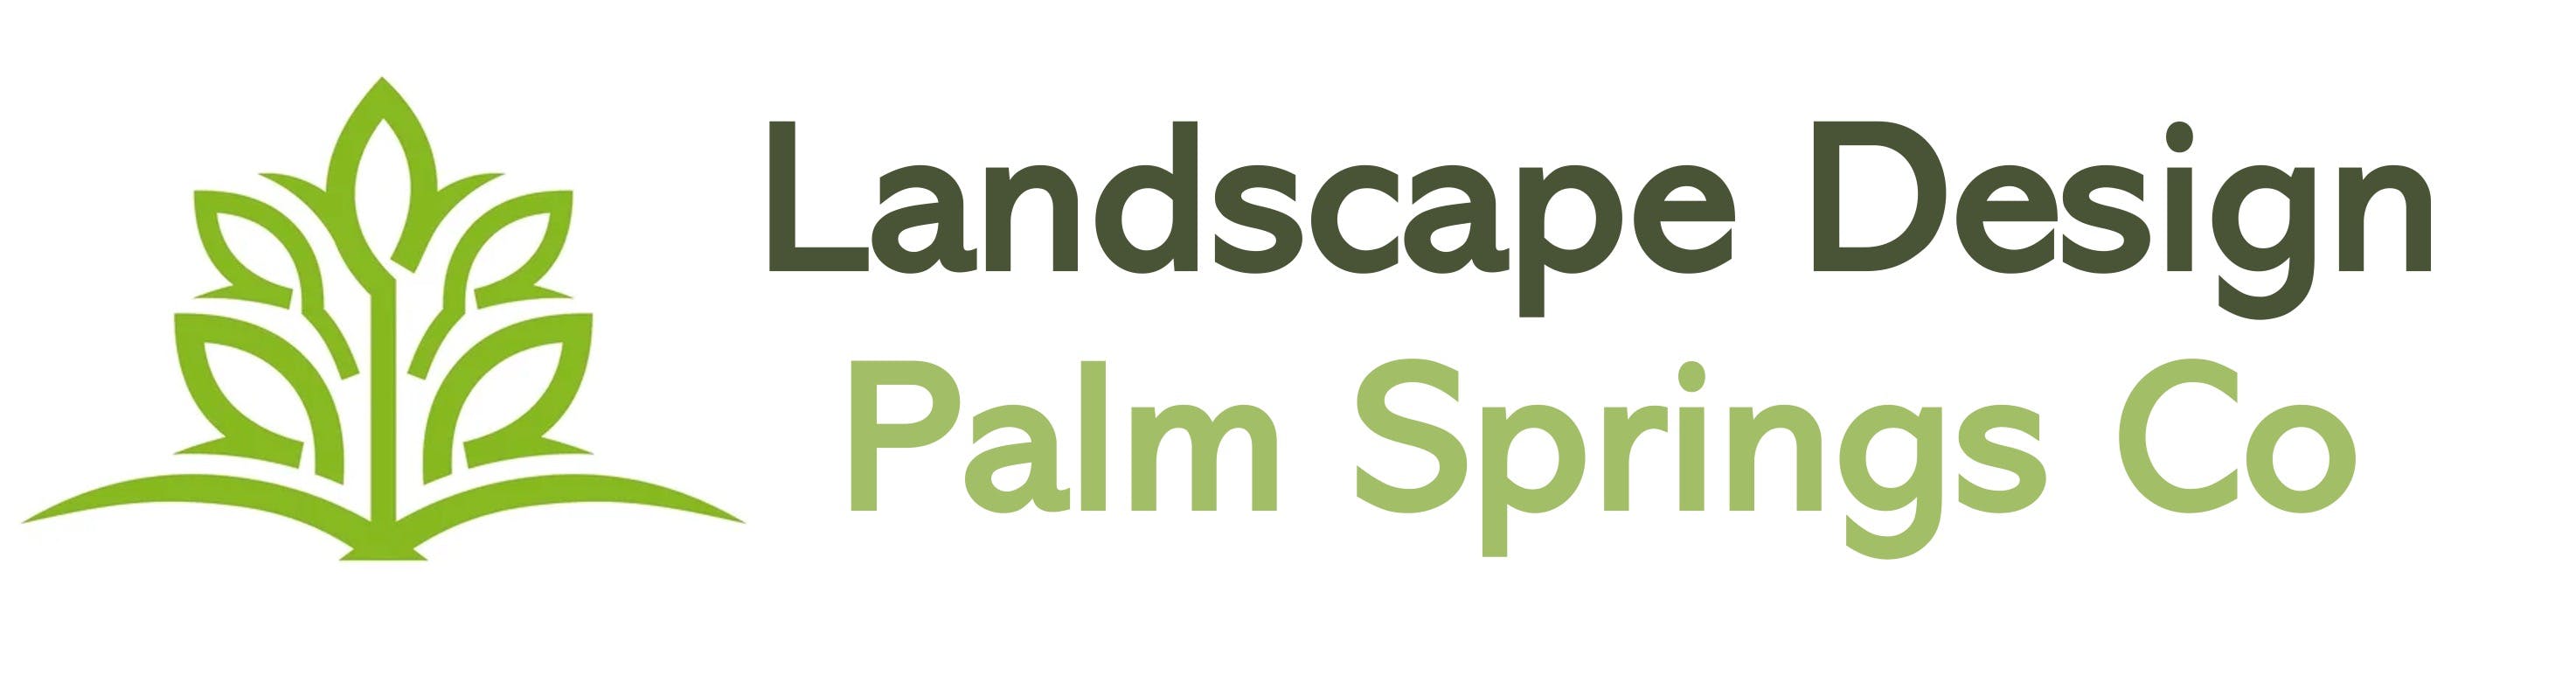  Landscape Design Palm Springs Co logo